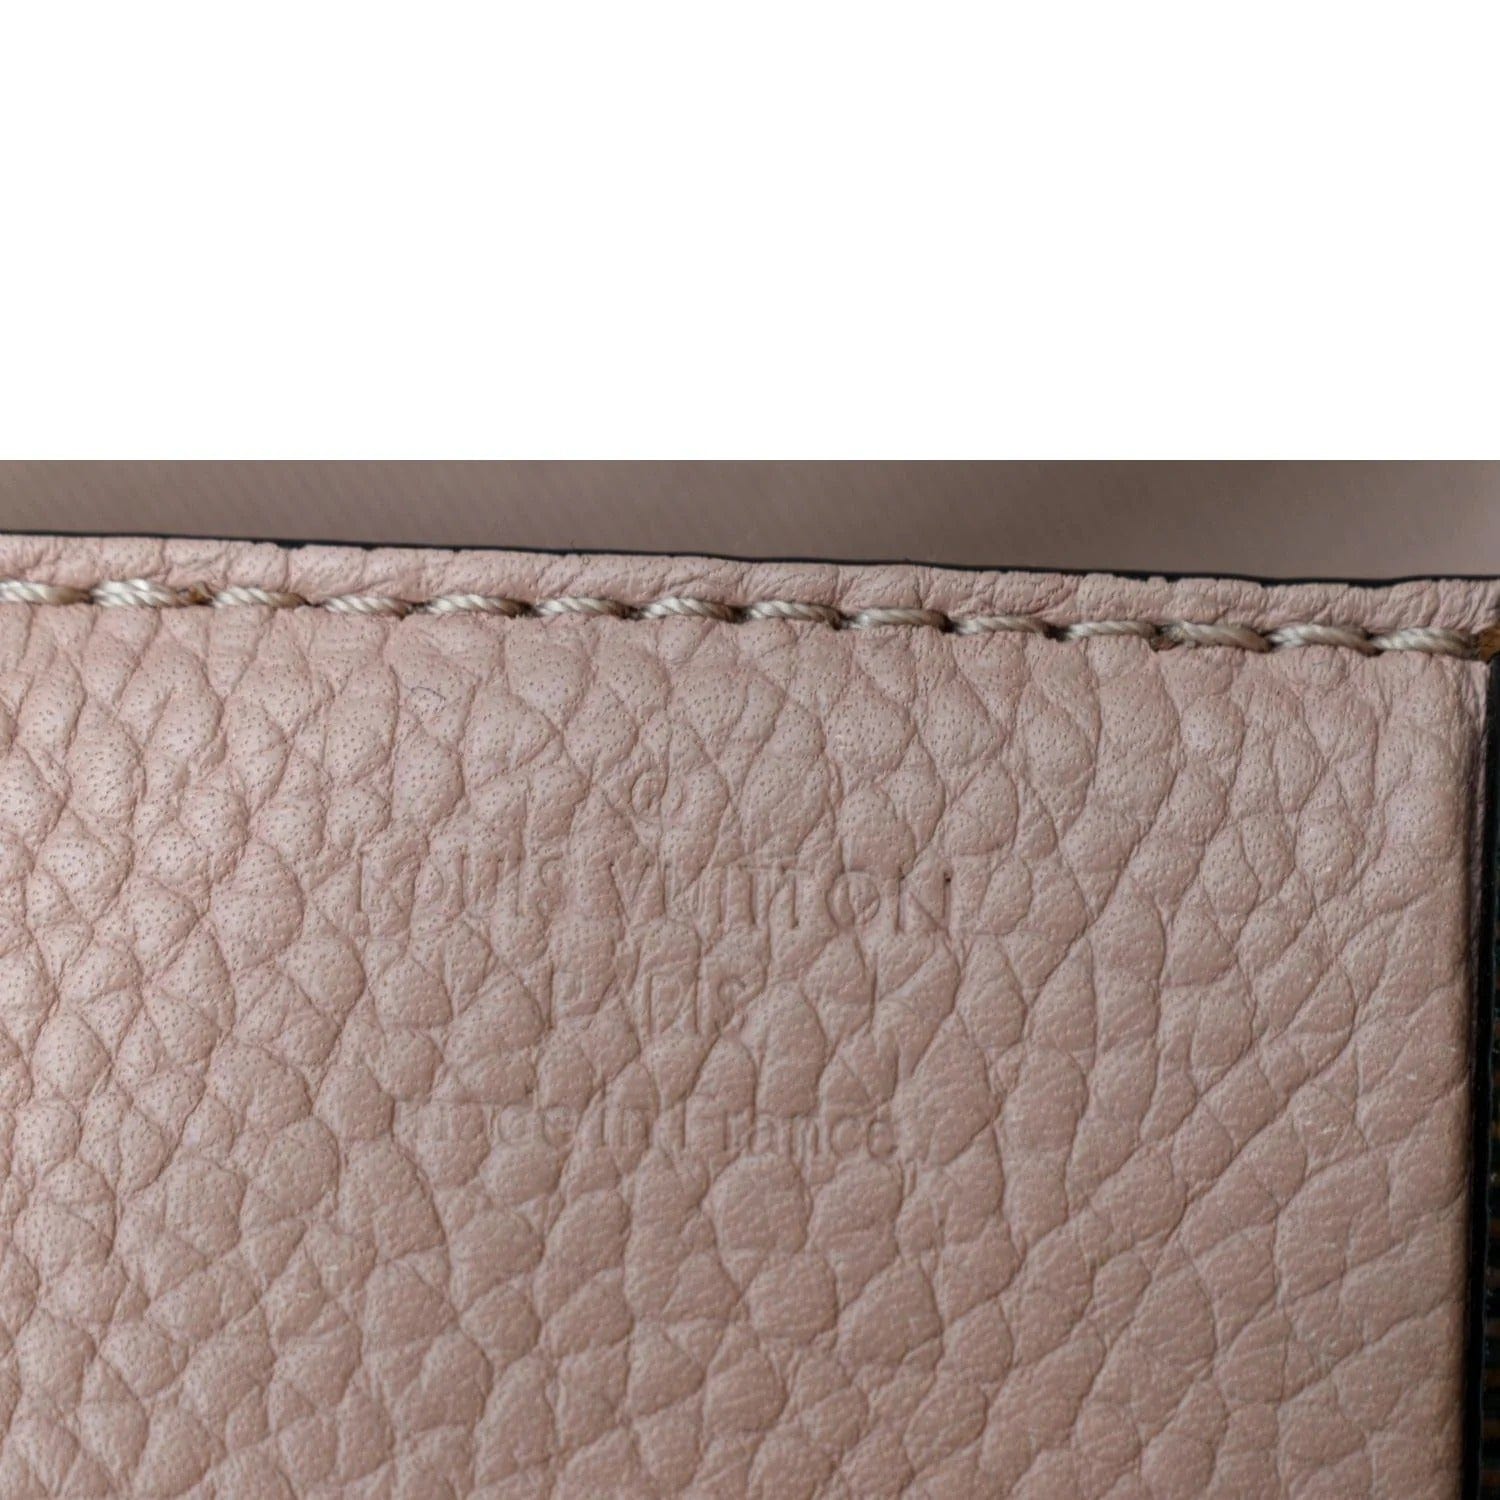 Louis Vuitton Magnolia Damier Ebene Canvas And Leather Bond Street Bag